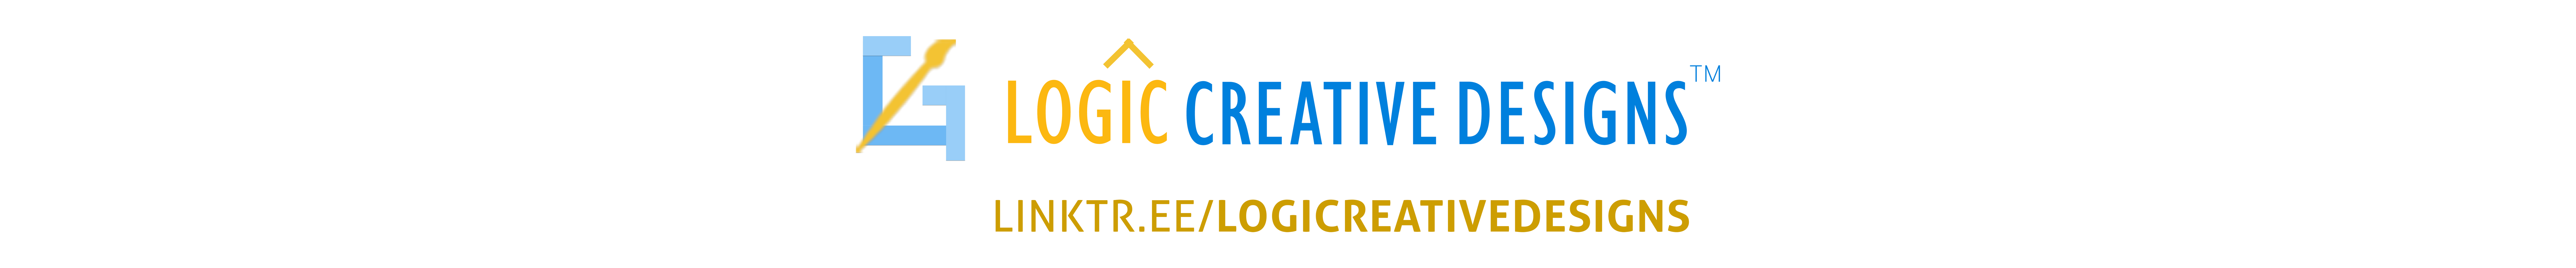 LoGic Creative Designs's profile banner